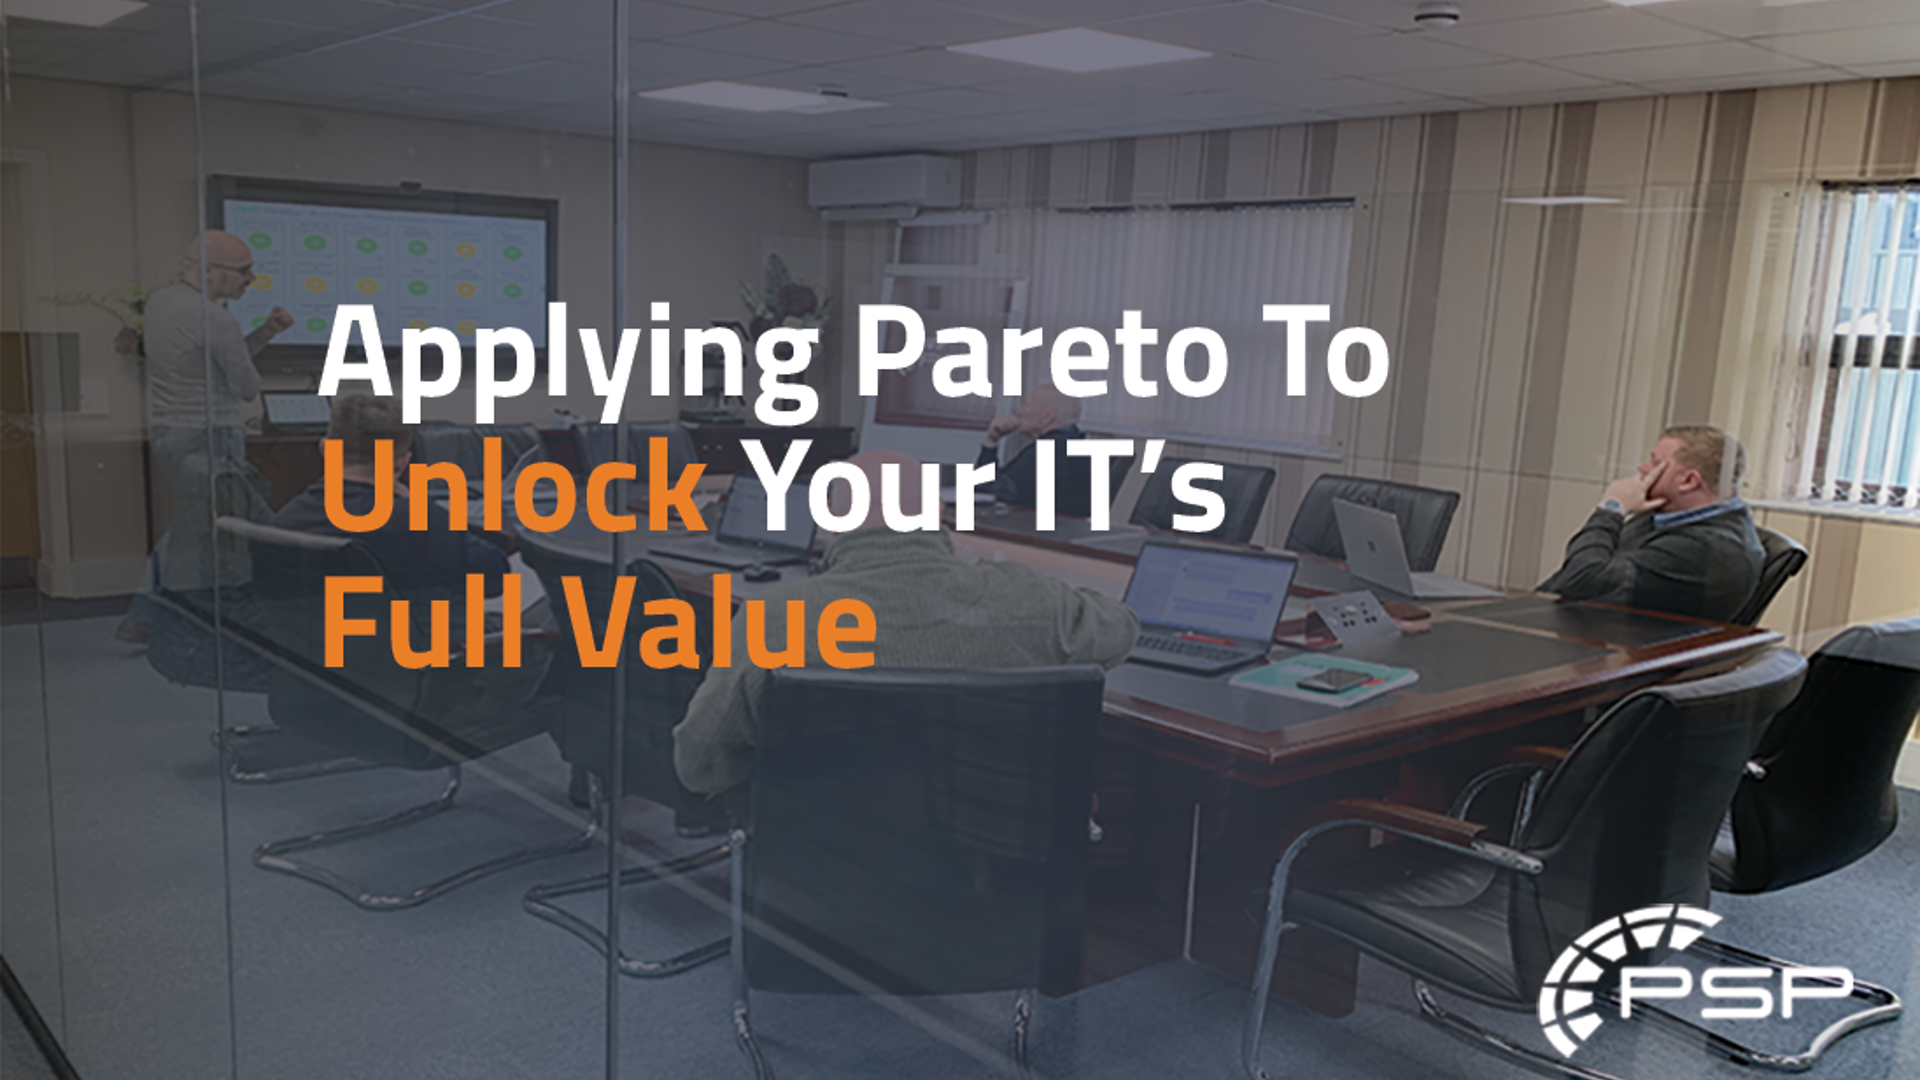 Applying Pareto to unlock your IT's full value